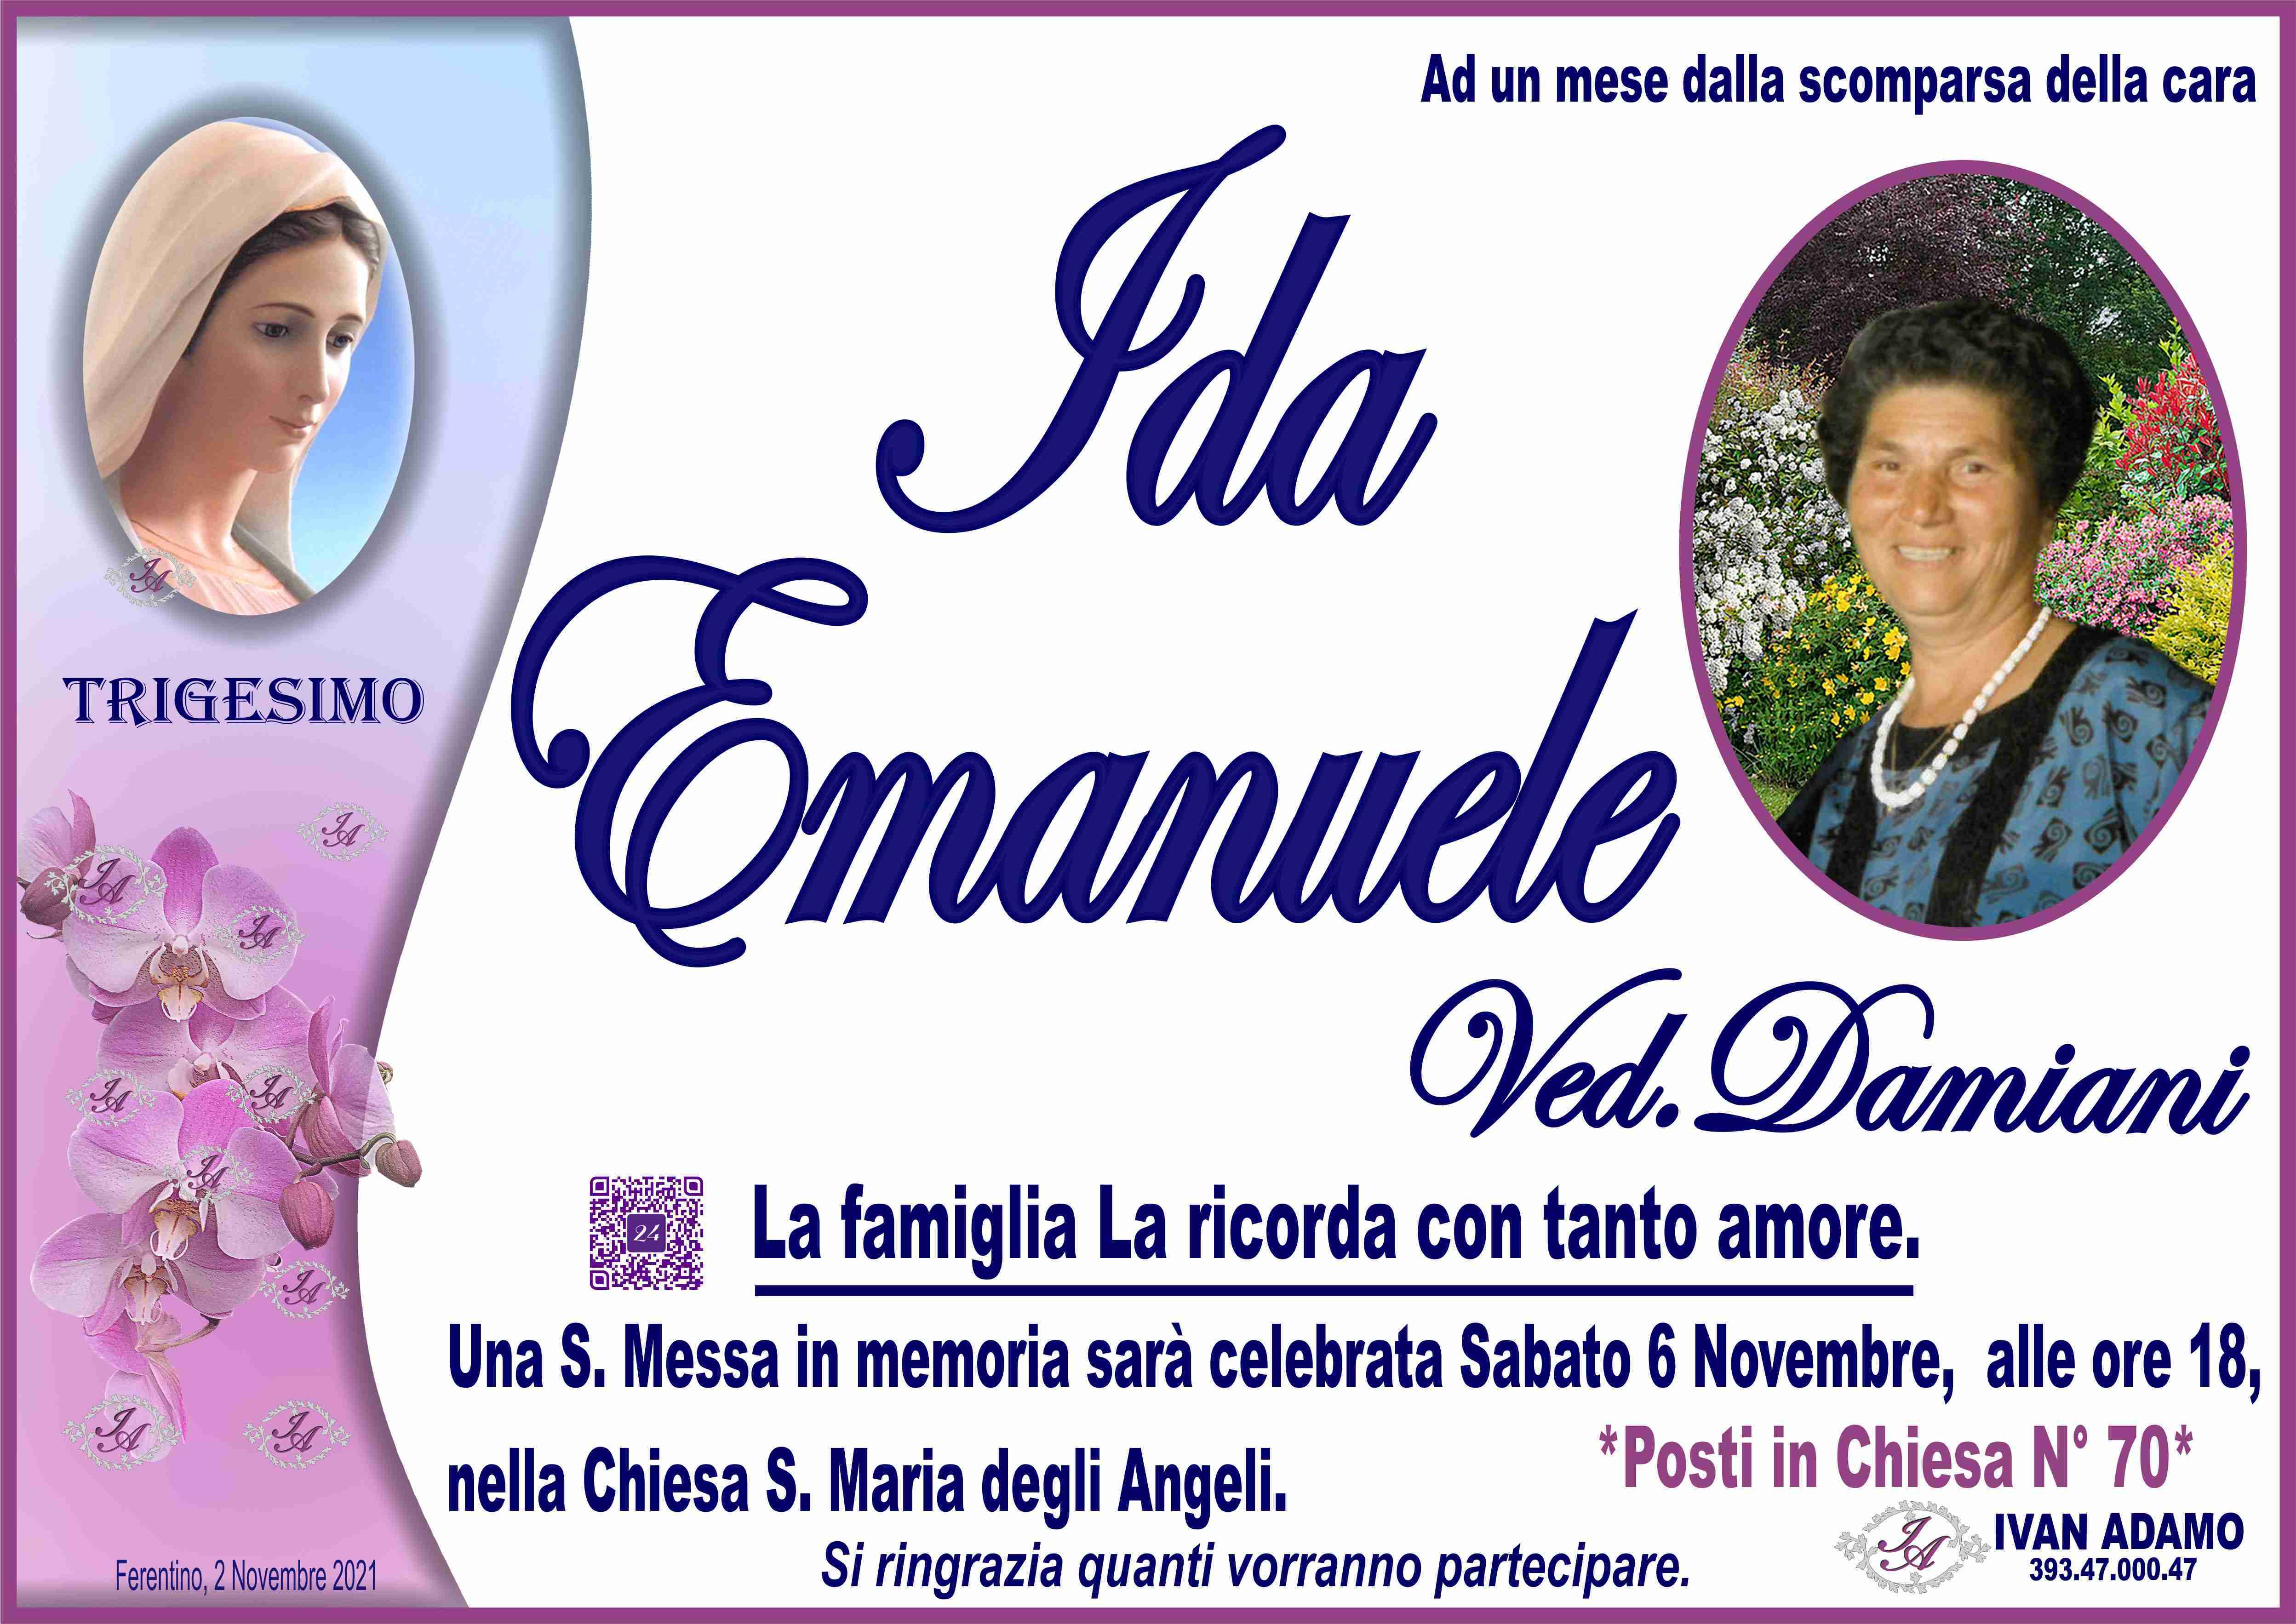 Ida Emanuele